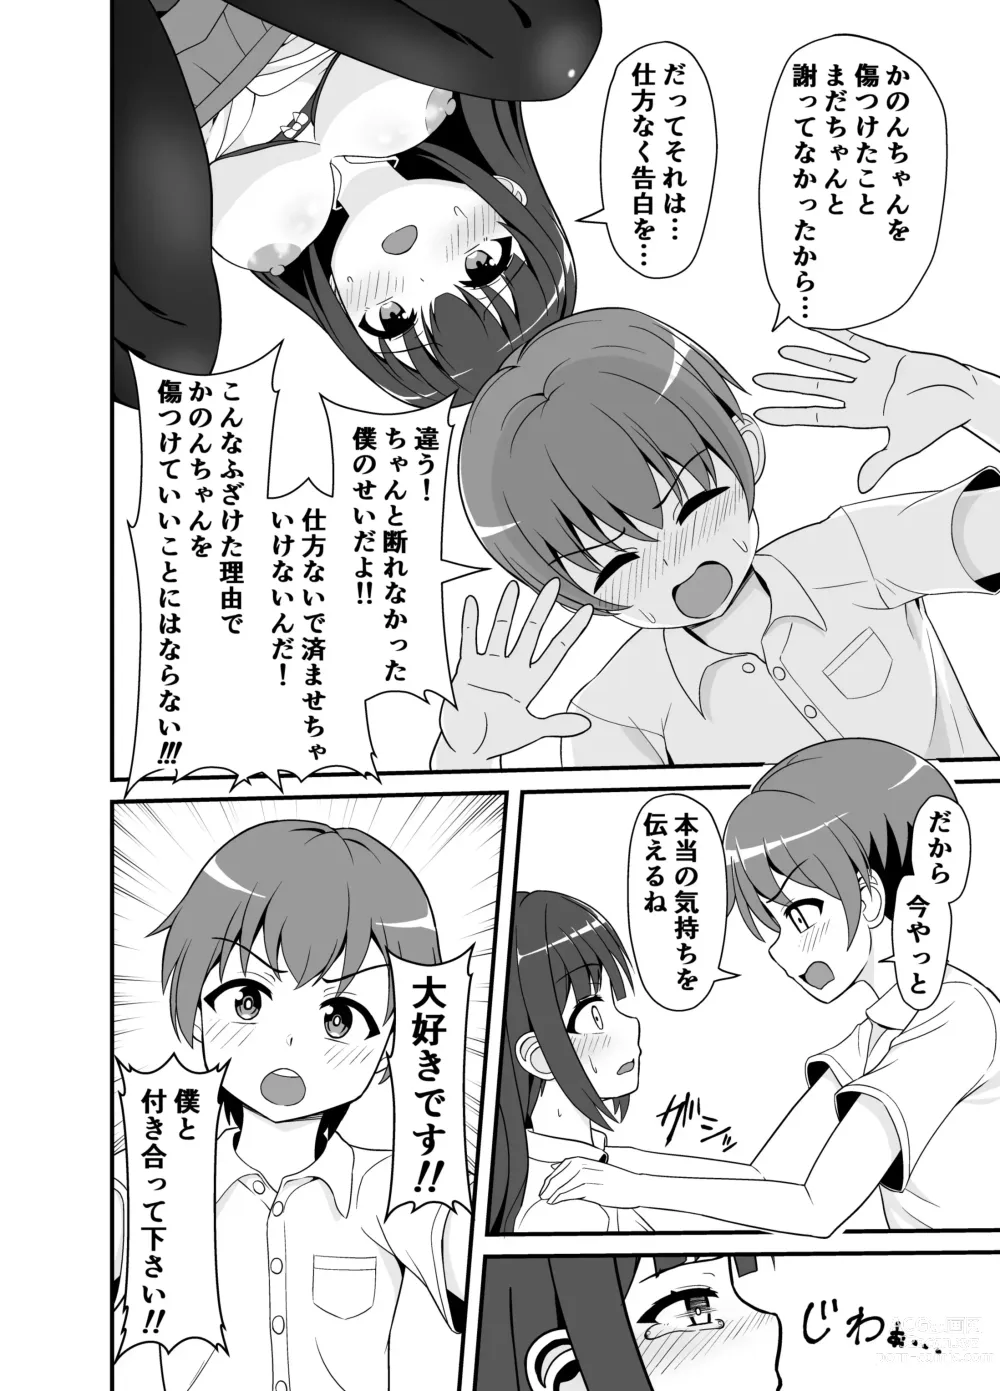 Page 56 of doujinshi 罰ゲームで告白した陰キャ彼女がドSだった件